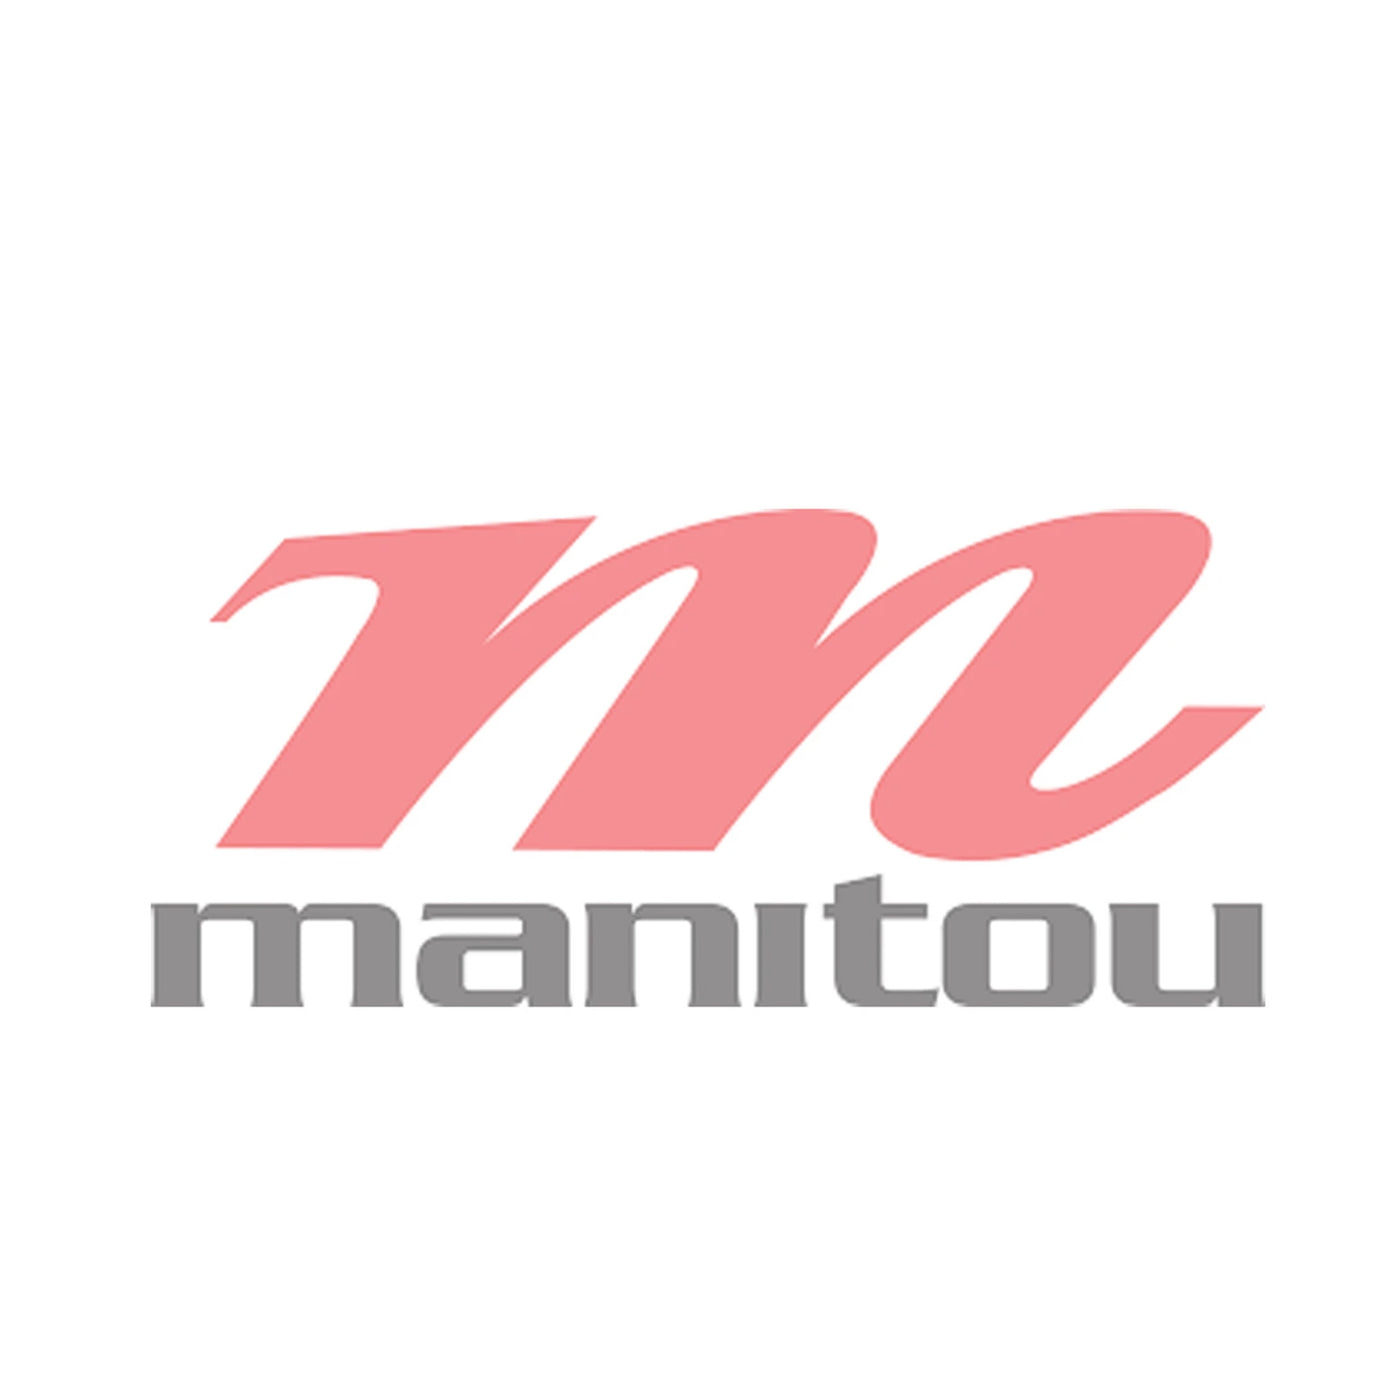 Manitou Milo remote conversion kit